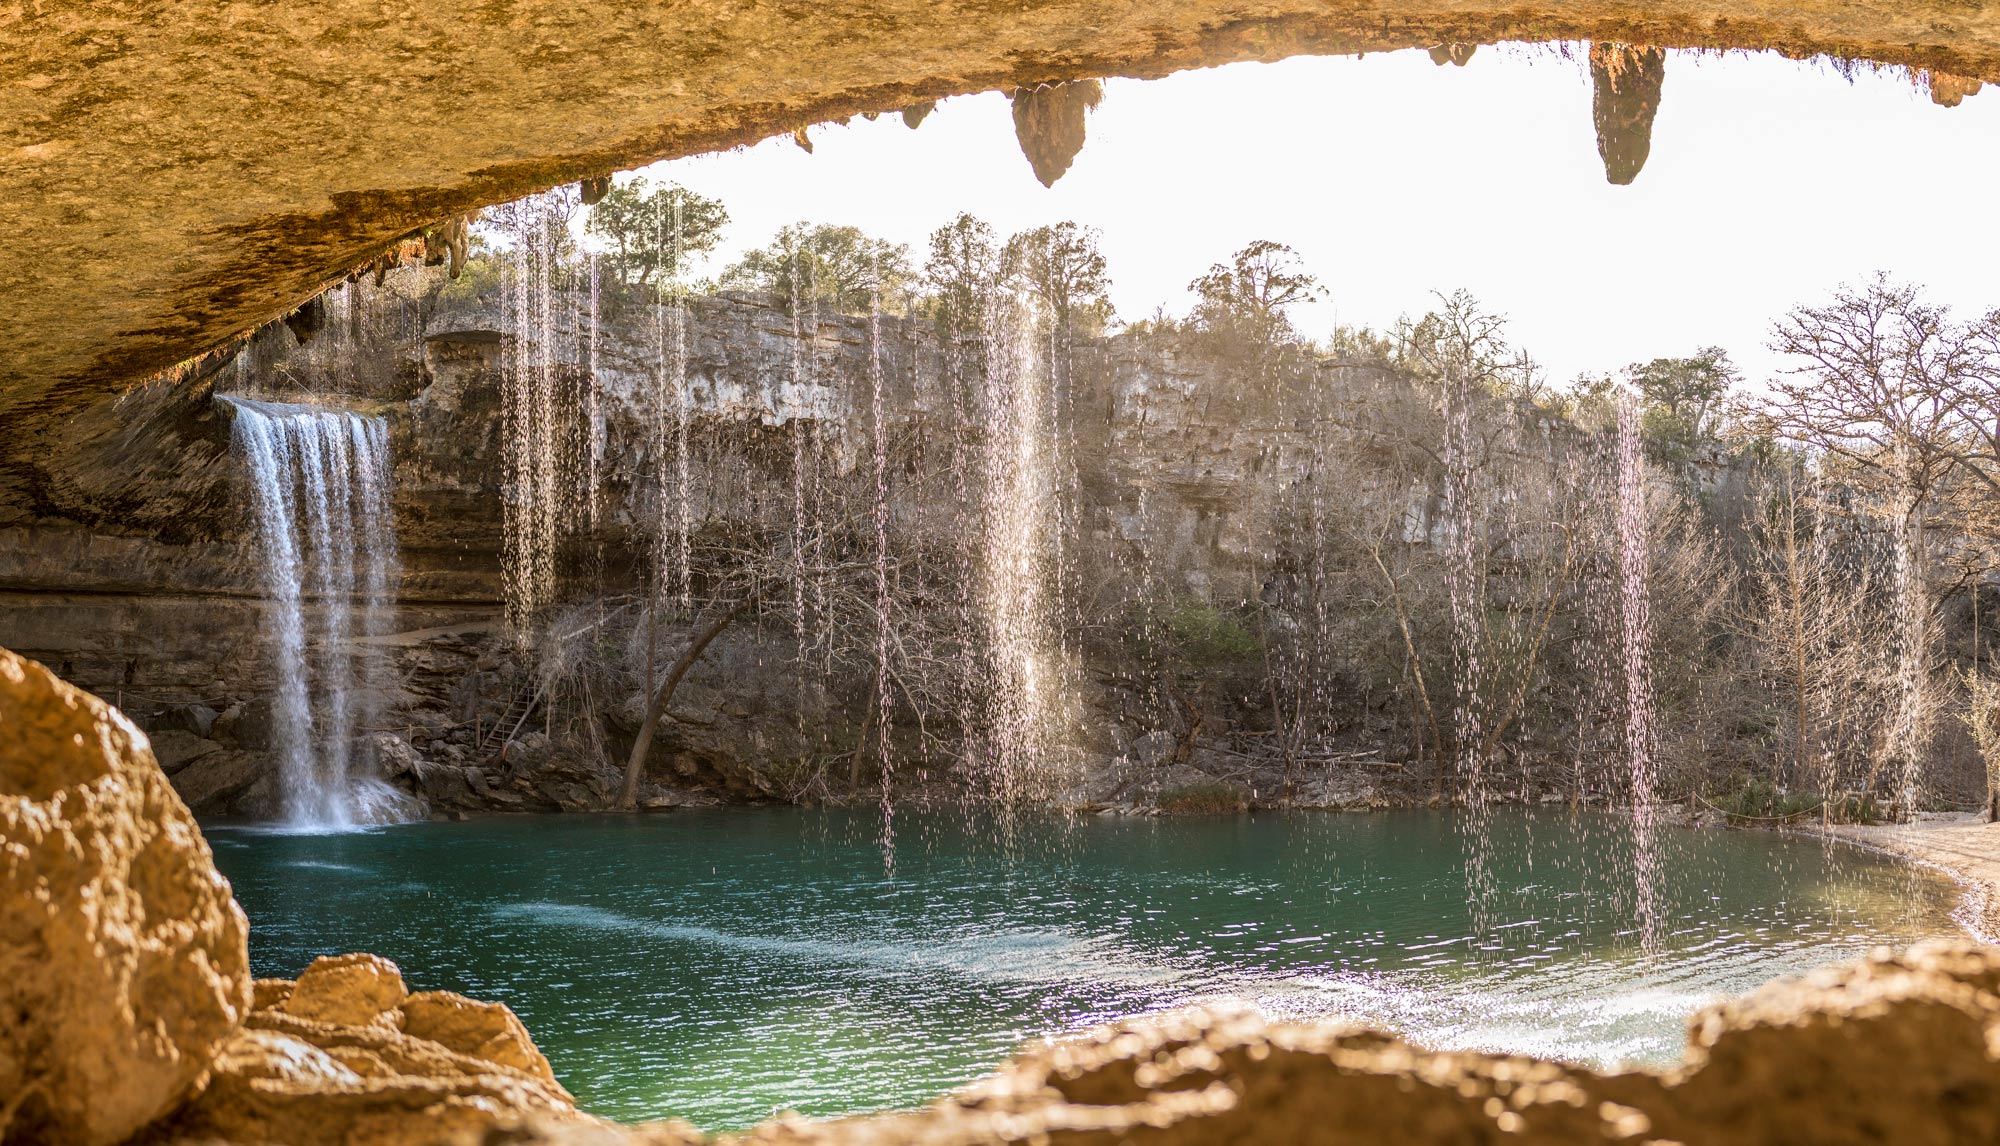 Hamilton Pool waterfall in Texas